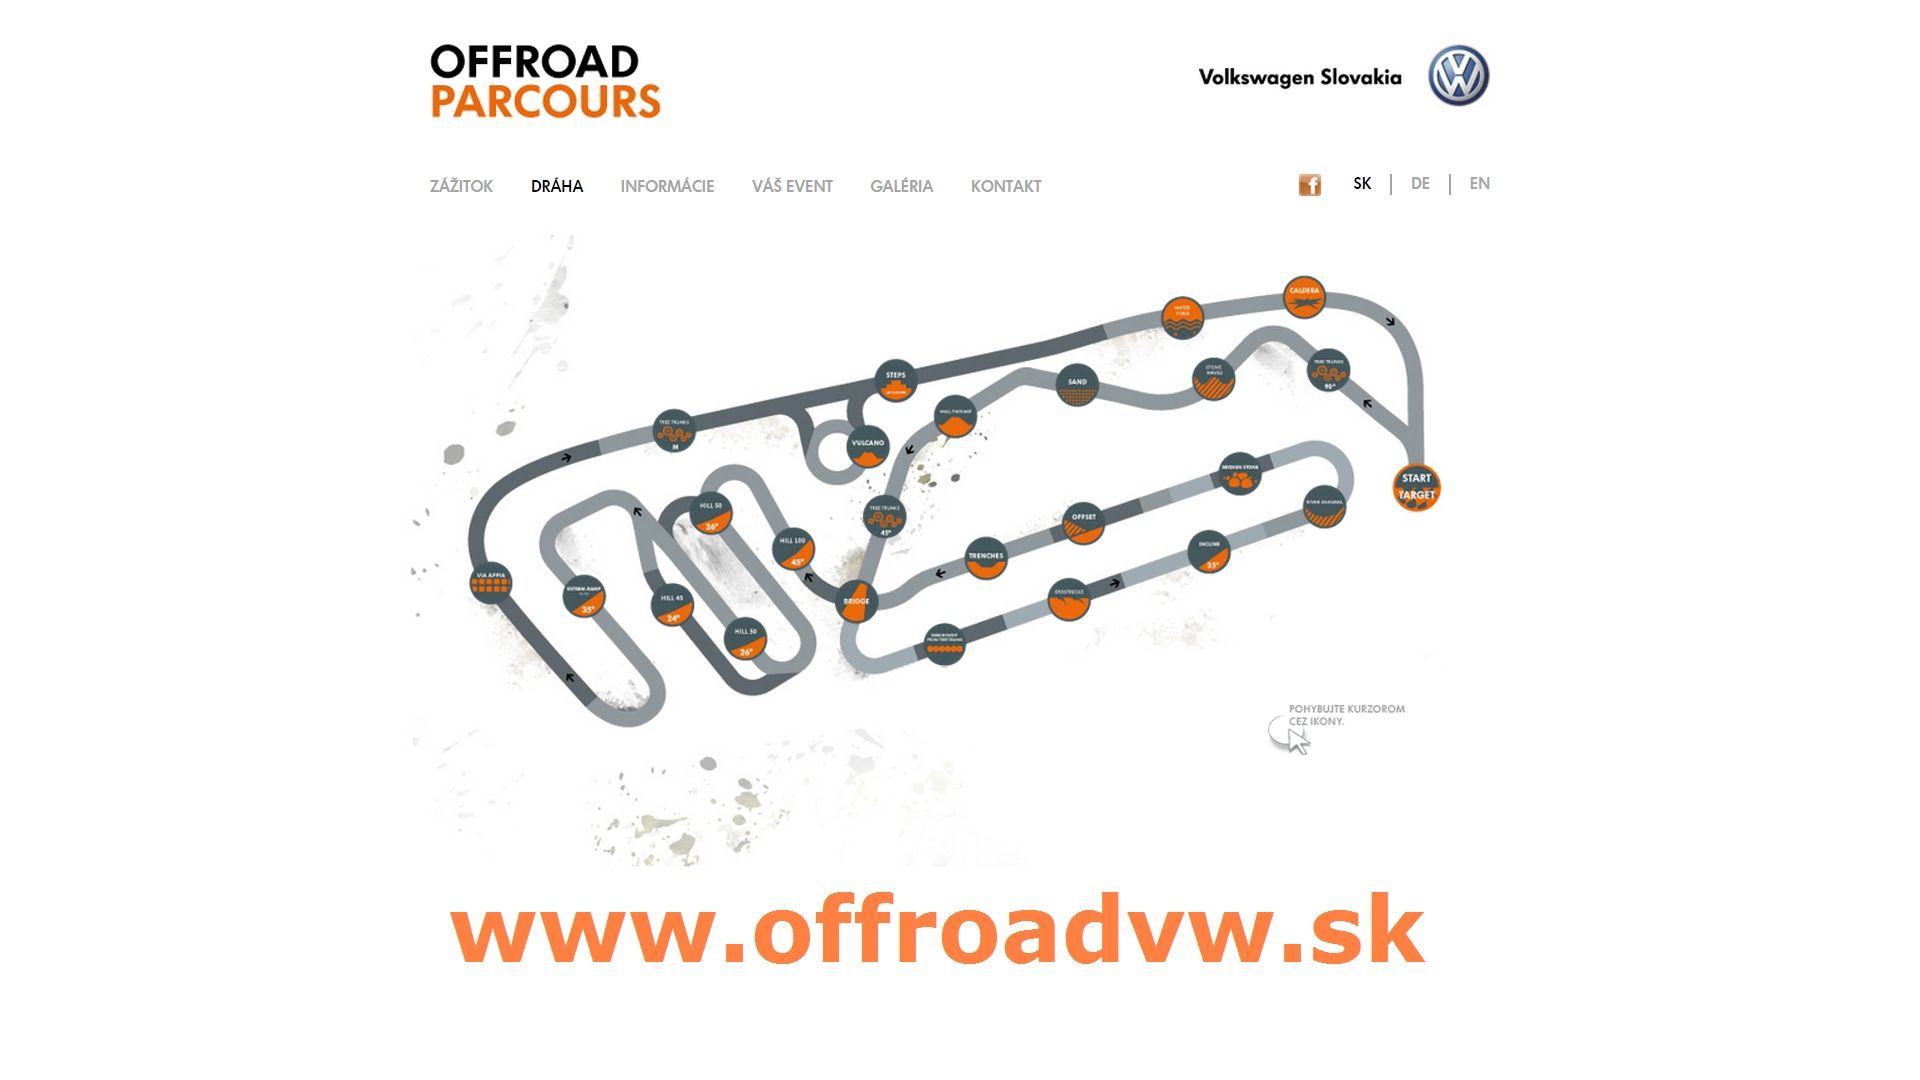 Mapa offroad Parkour v areali fabriky VW Devinska Nova Ves